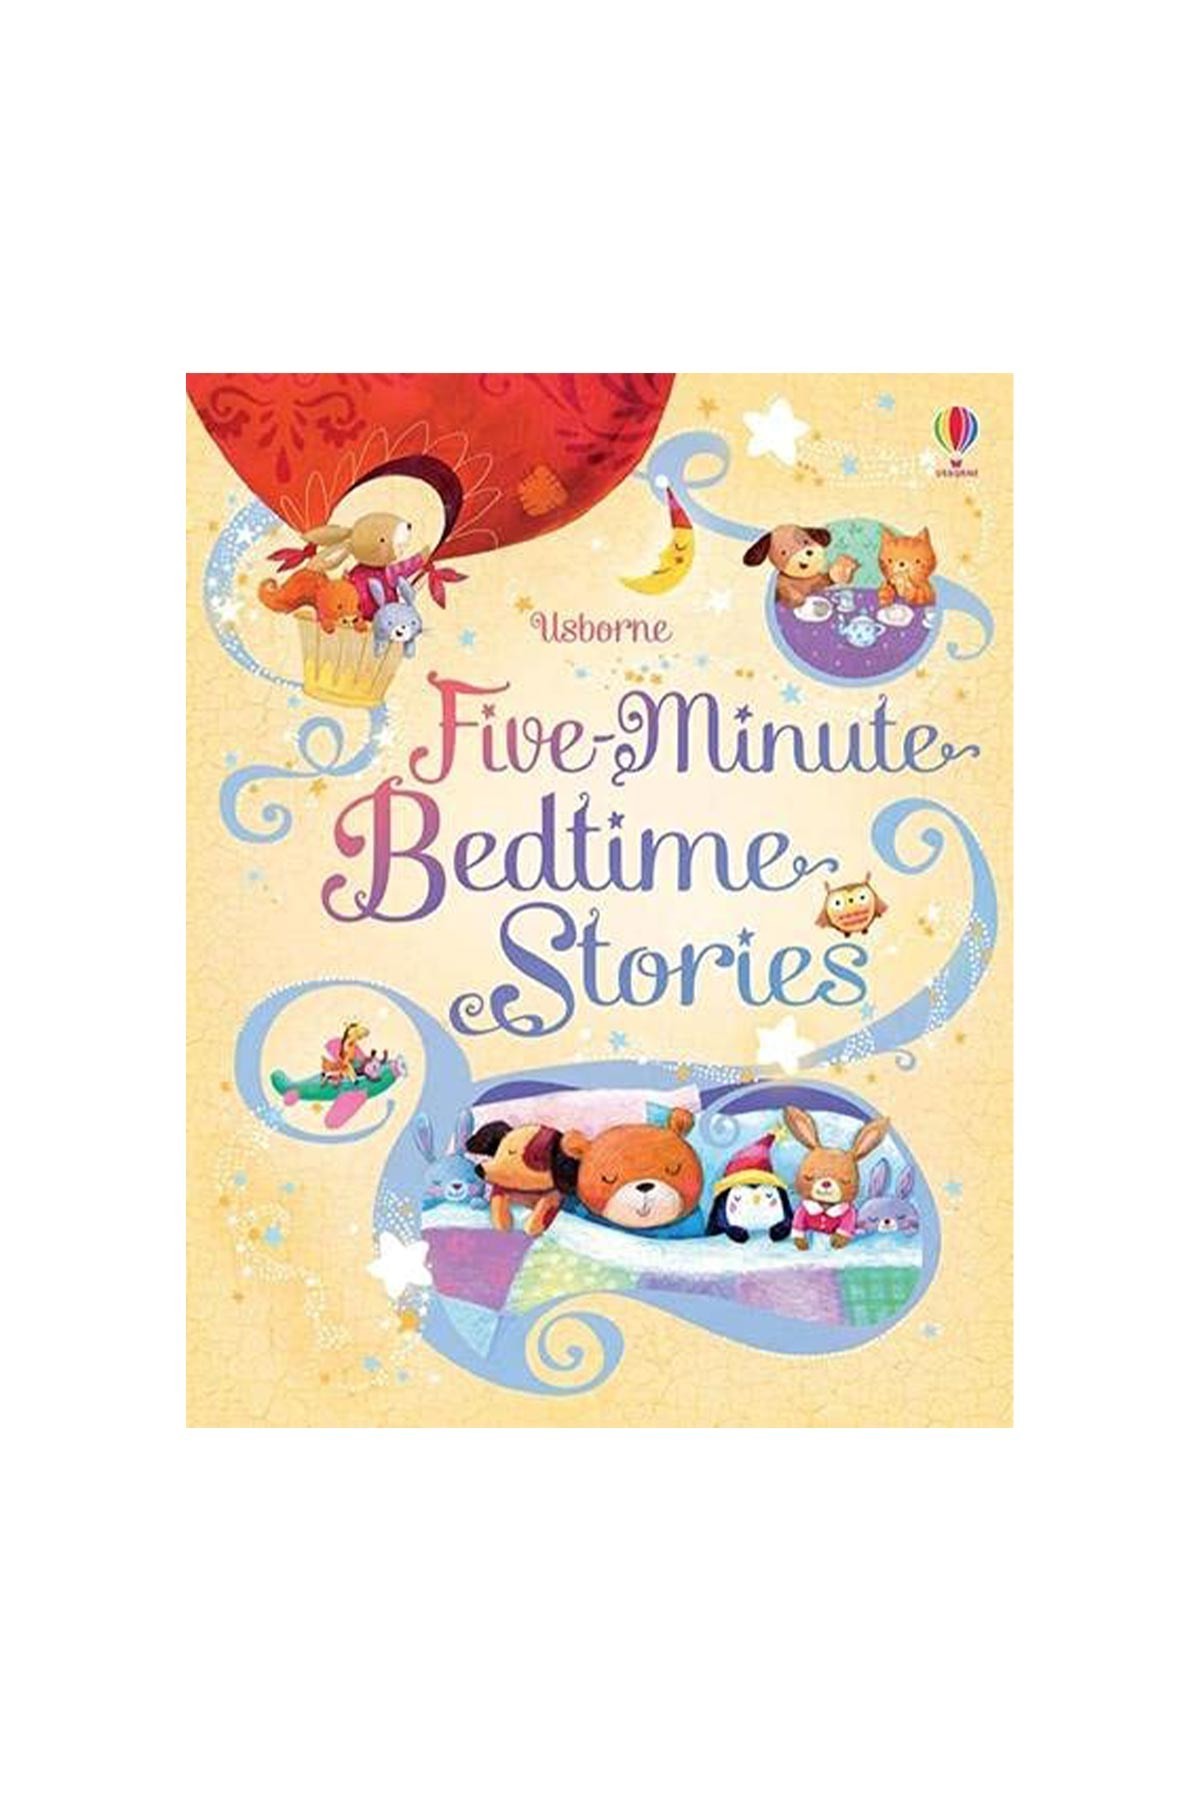 The Usborne Five Minute Bedtime Stories